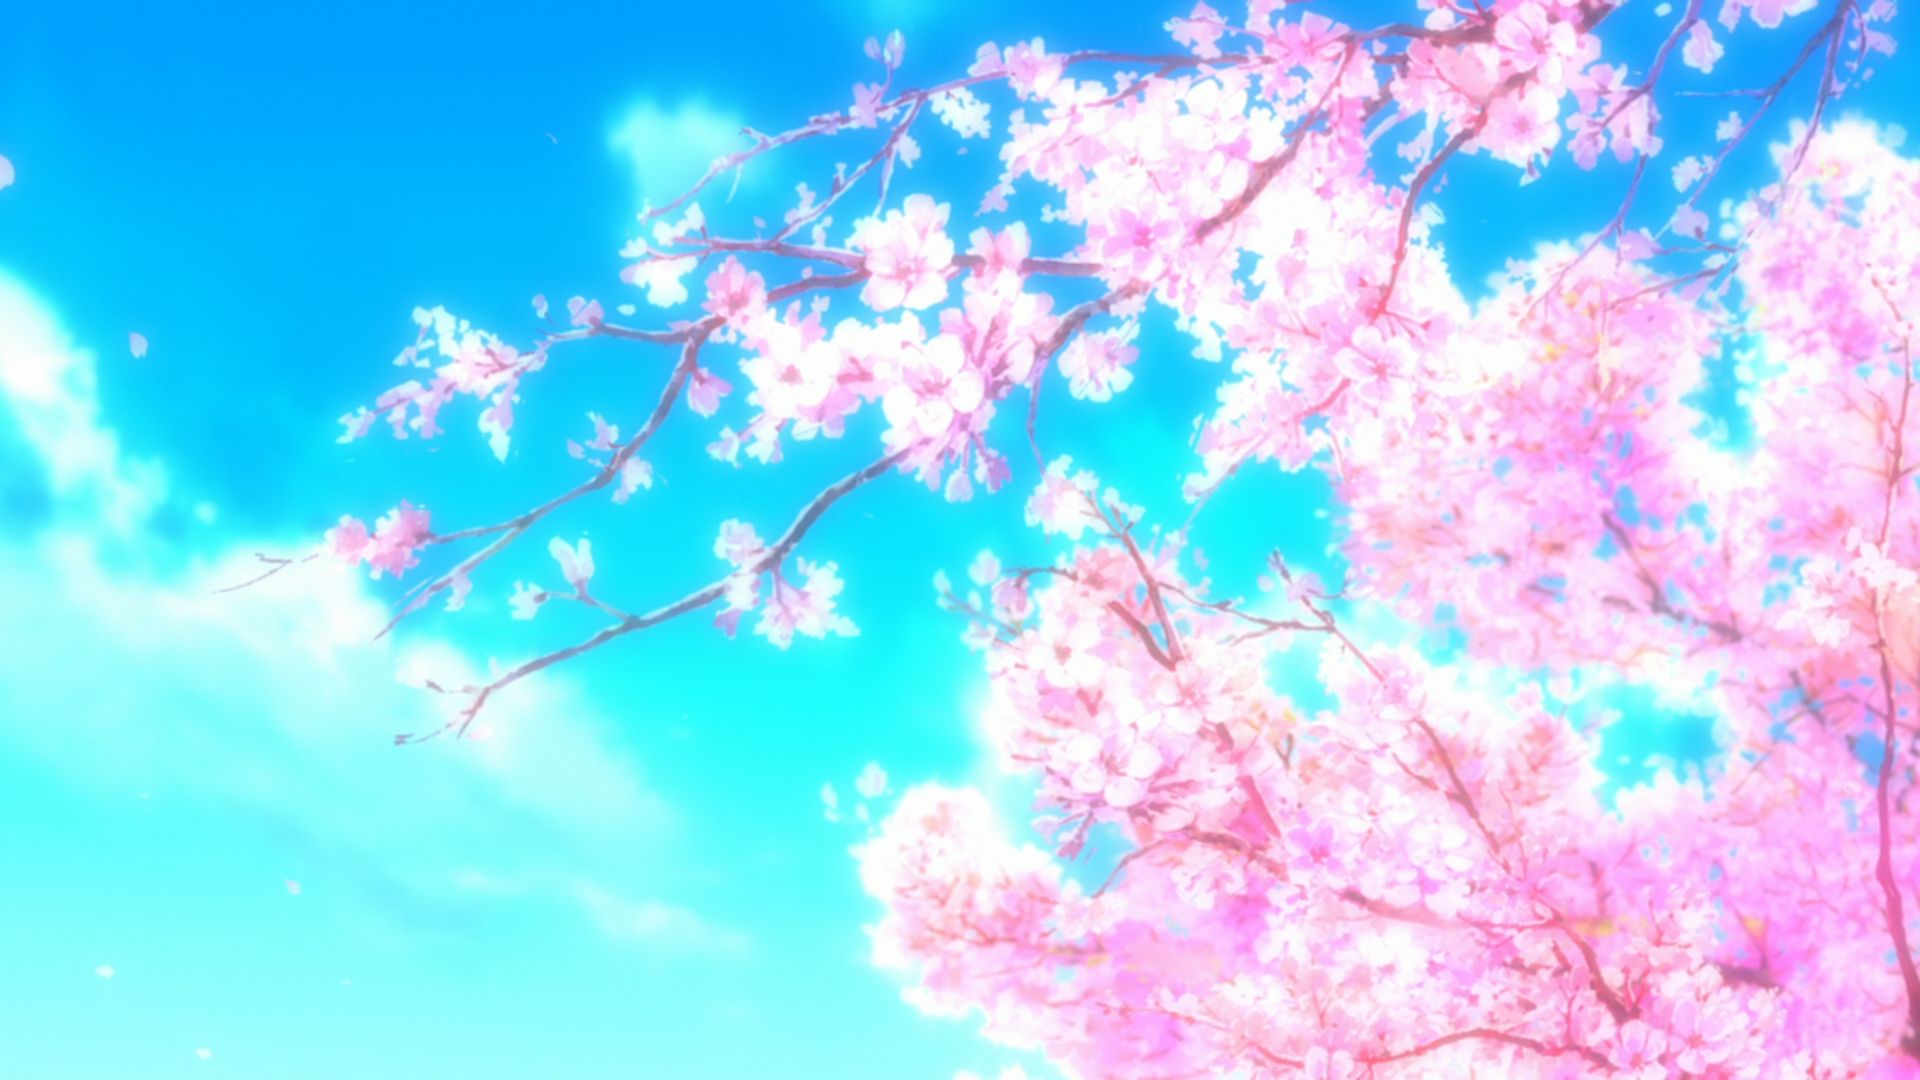 663803 descargar imagen sakura, animado, hyouka, flor de cerezo, flor de sakura: fondos de pantalla y protectores de pantalla gratis